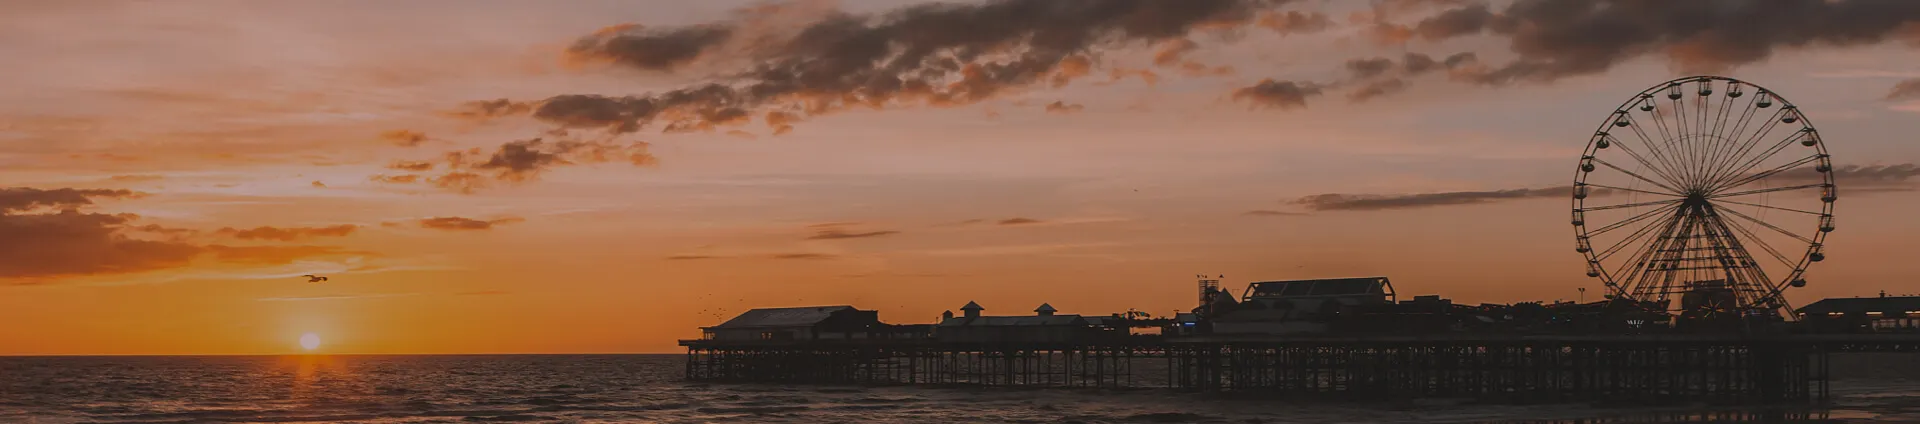 Blackpool view